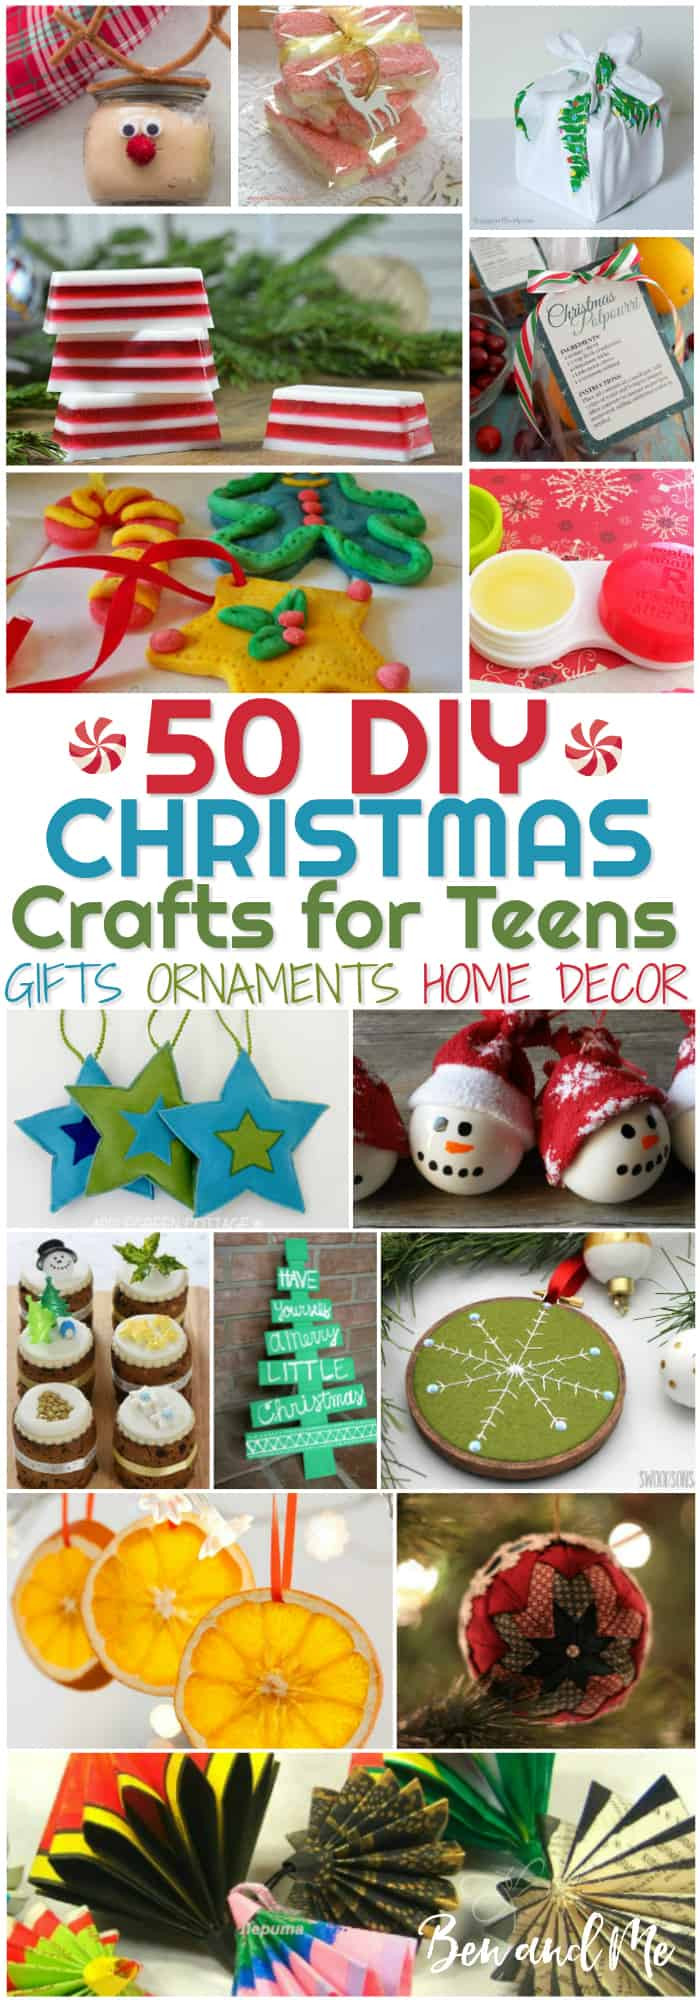 DIY Christmas Gifts For Teens
 DIY Christmas Crafts for Teens Ben and Me